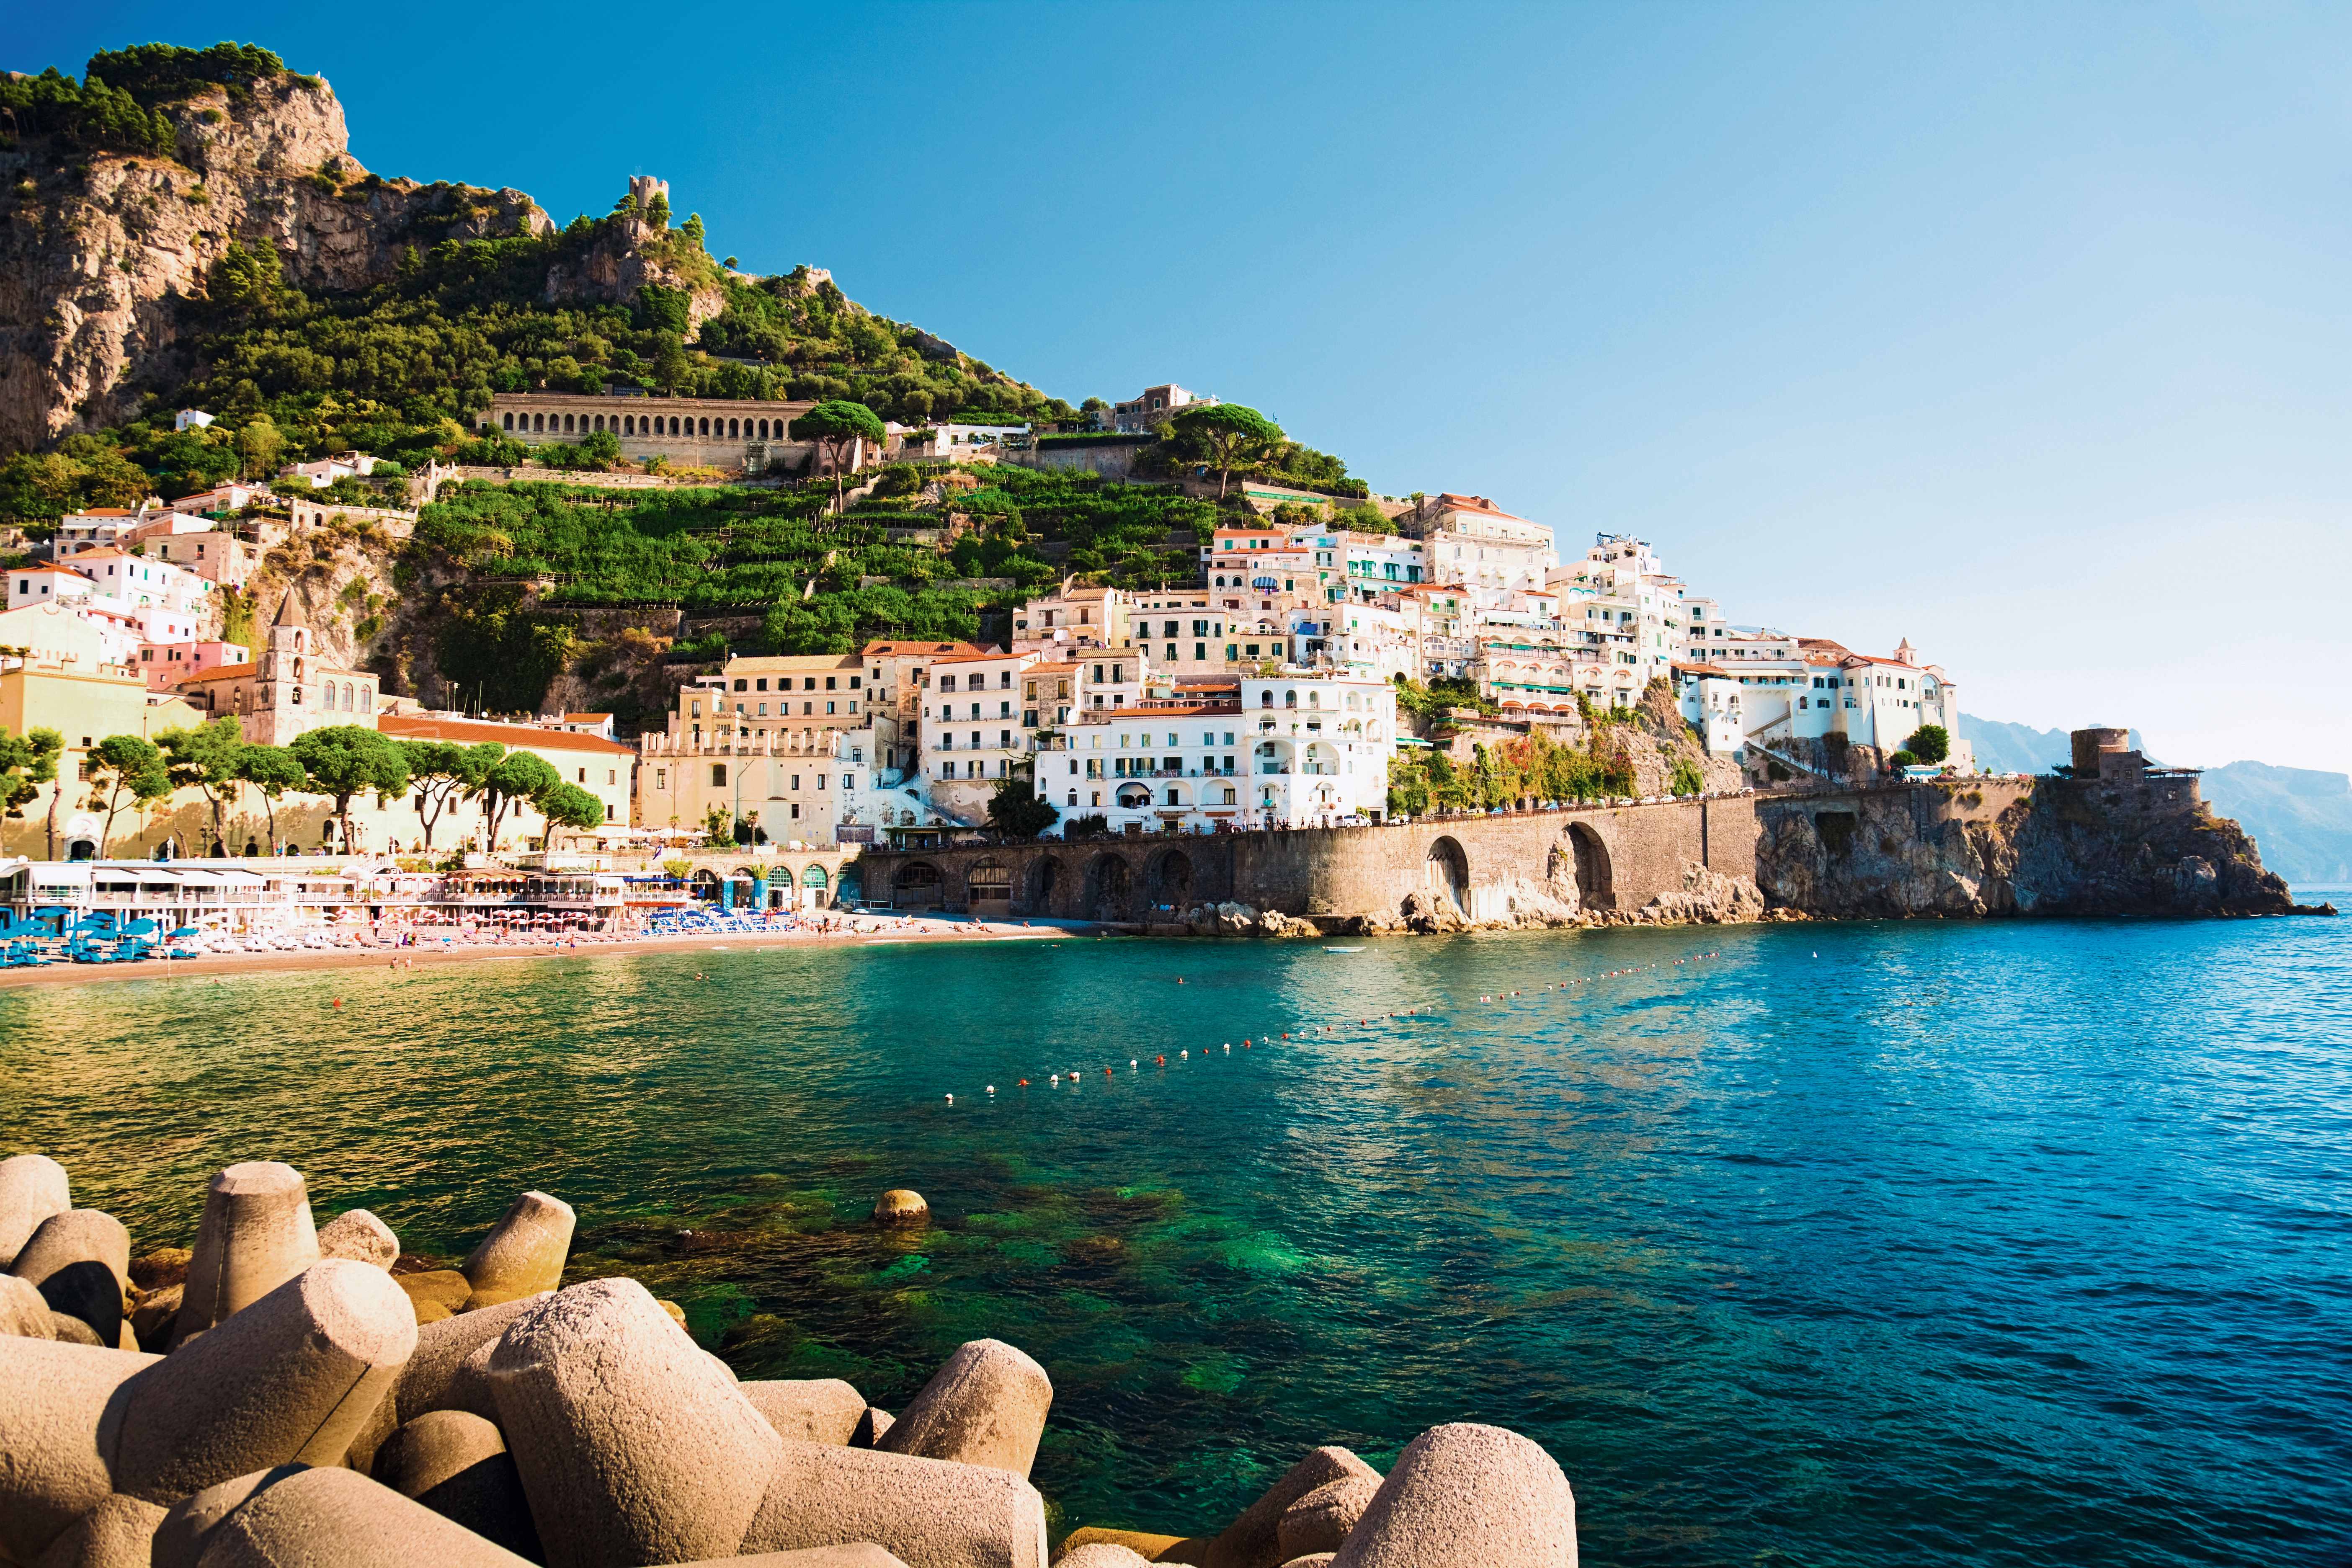 Golf von Neapel & Amalfiküste: Wandern